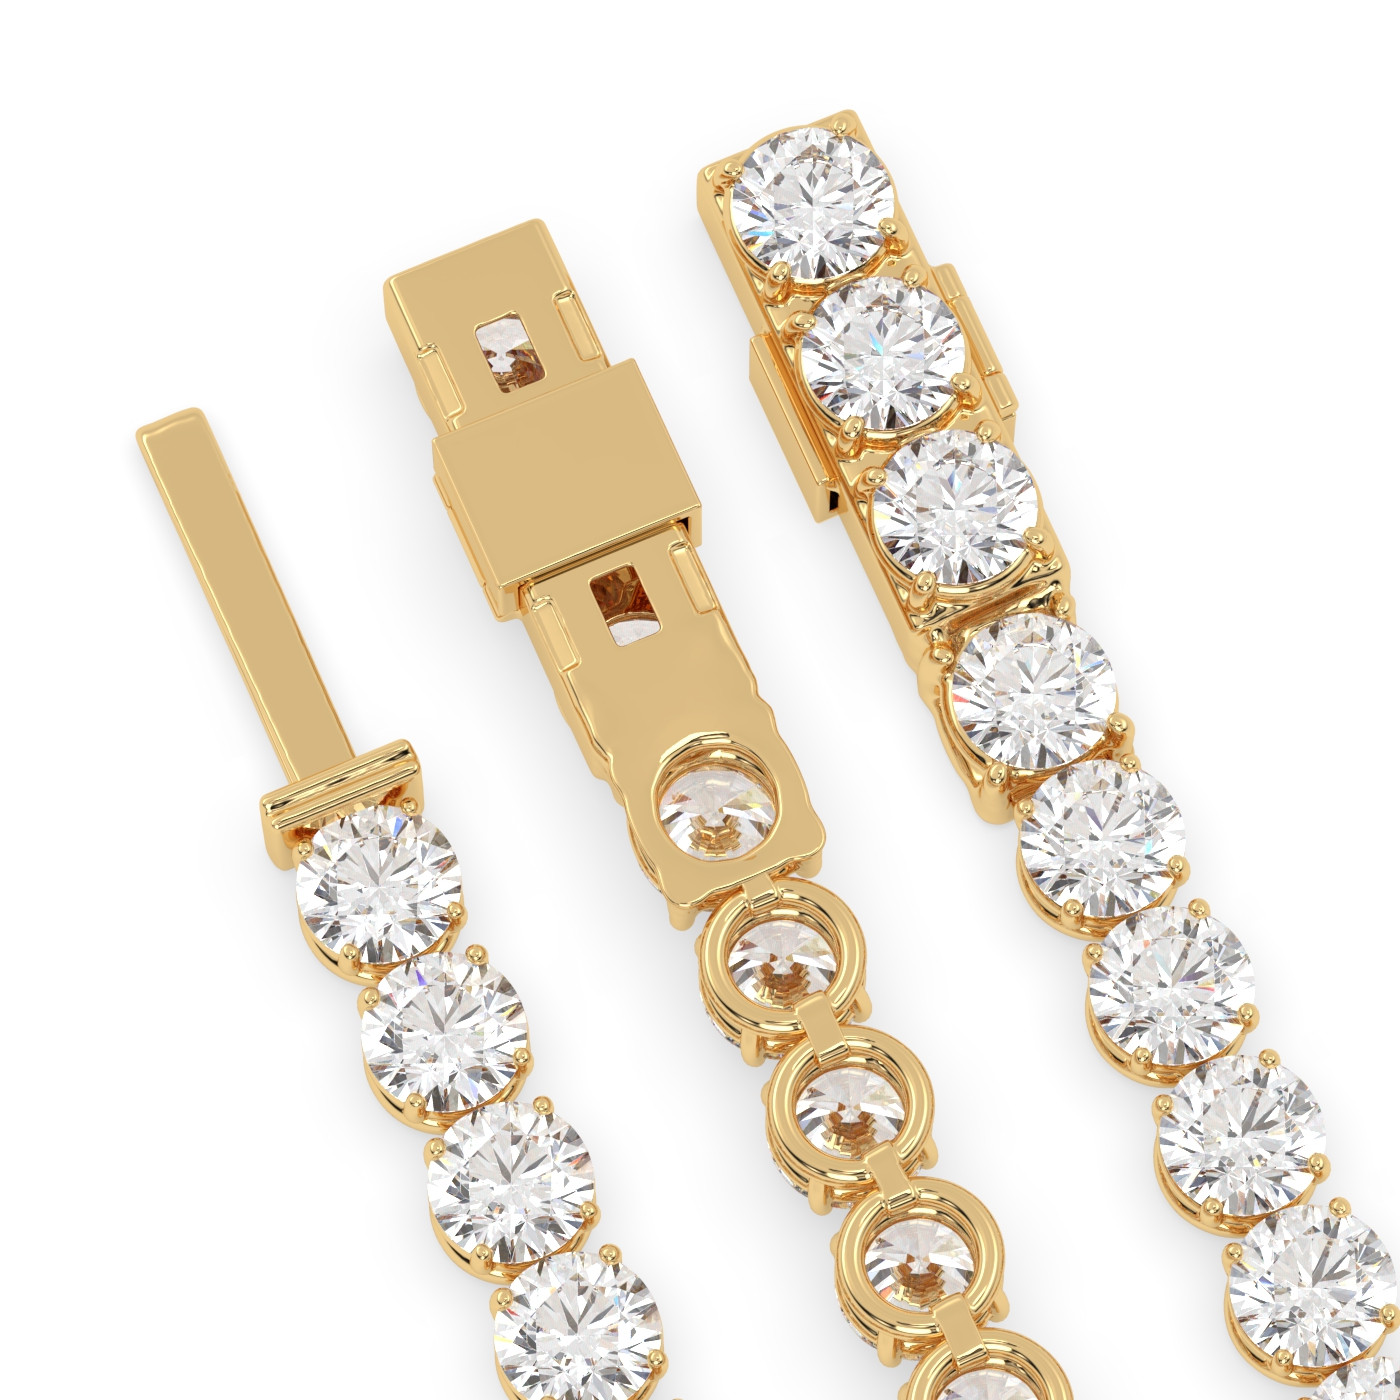 18k yellow gold 10 carat round diamond tennis bracelet with modern american lock system